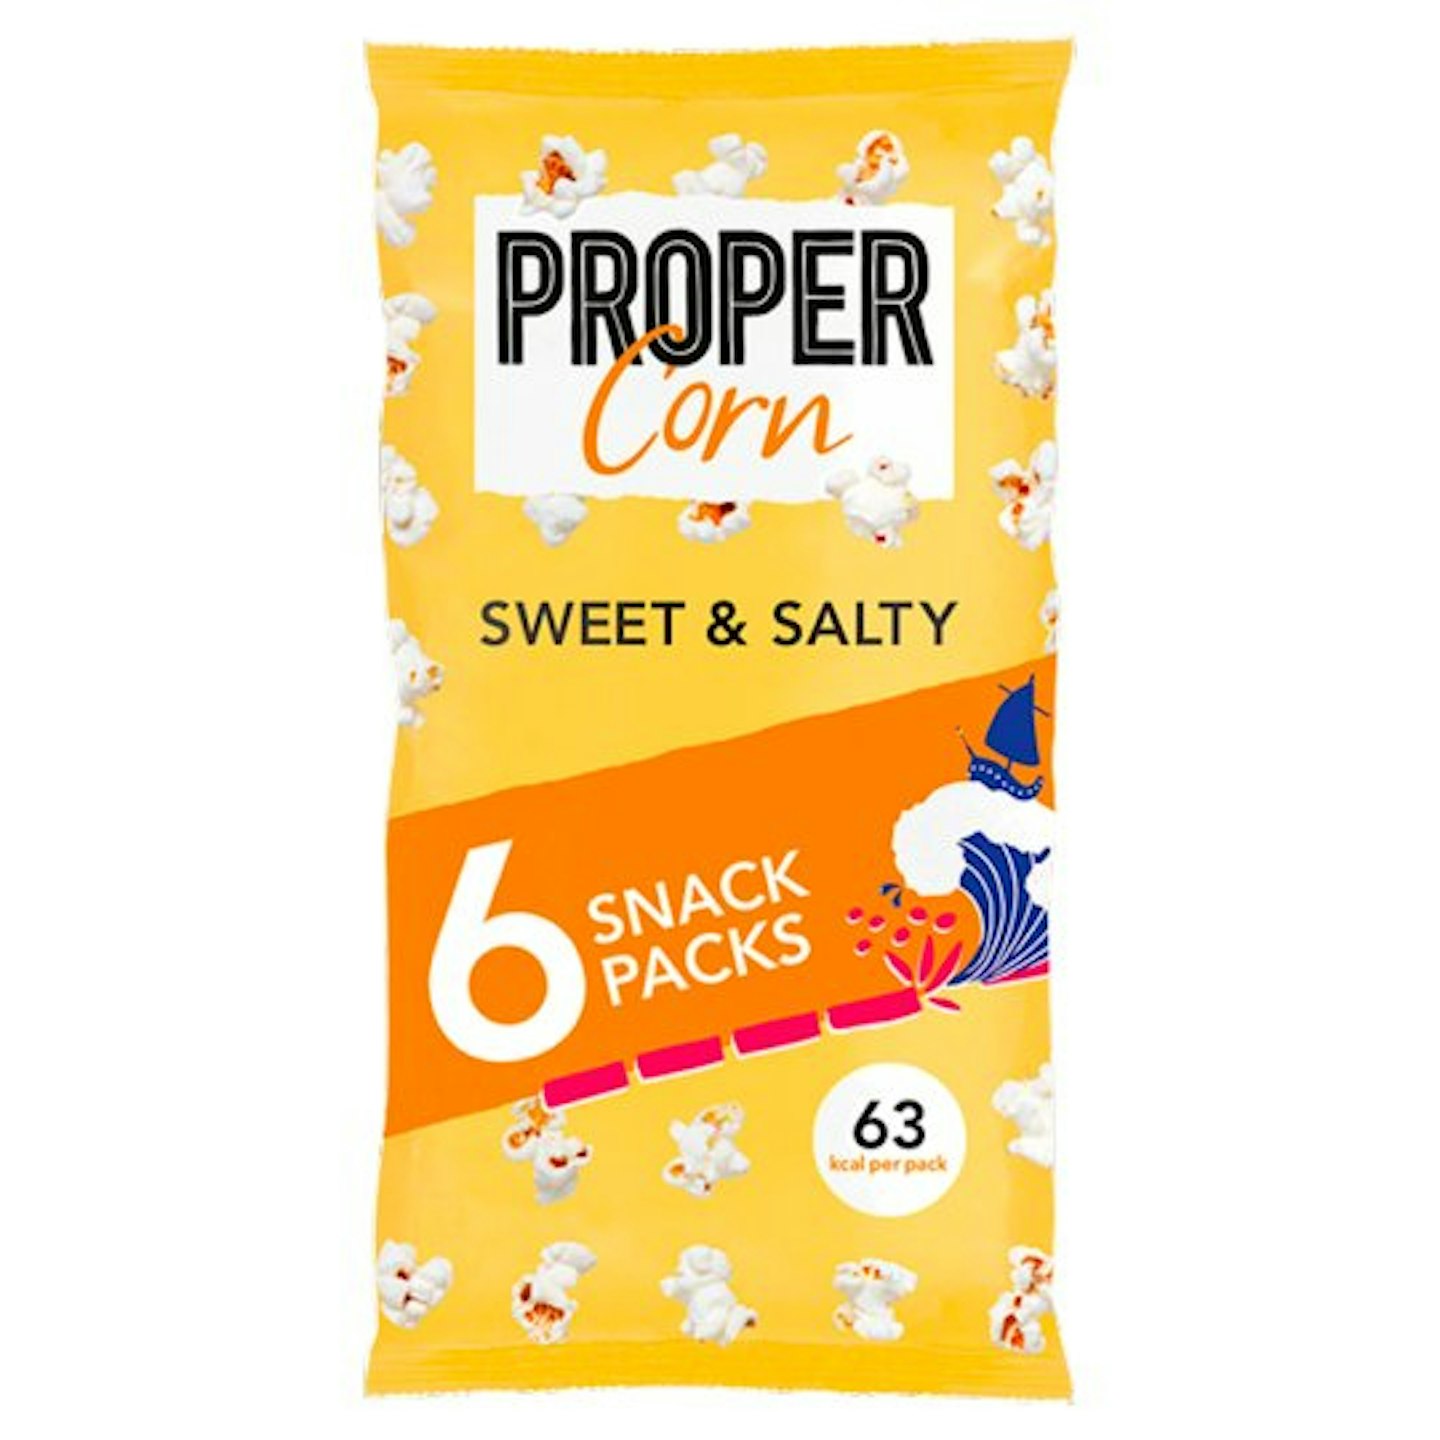 PROPERCORN Sweet & Salty Popcorn, Pack of 24